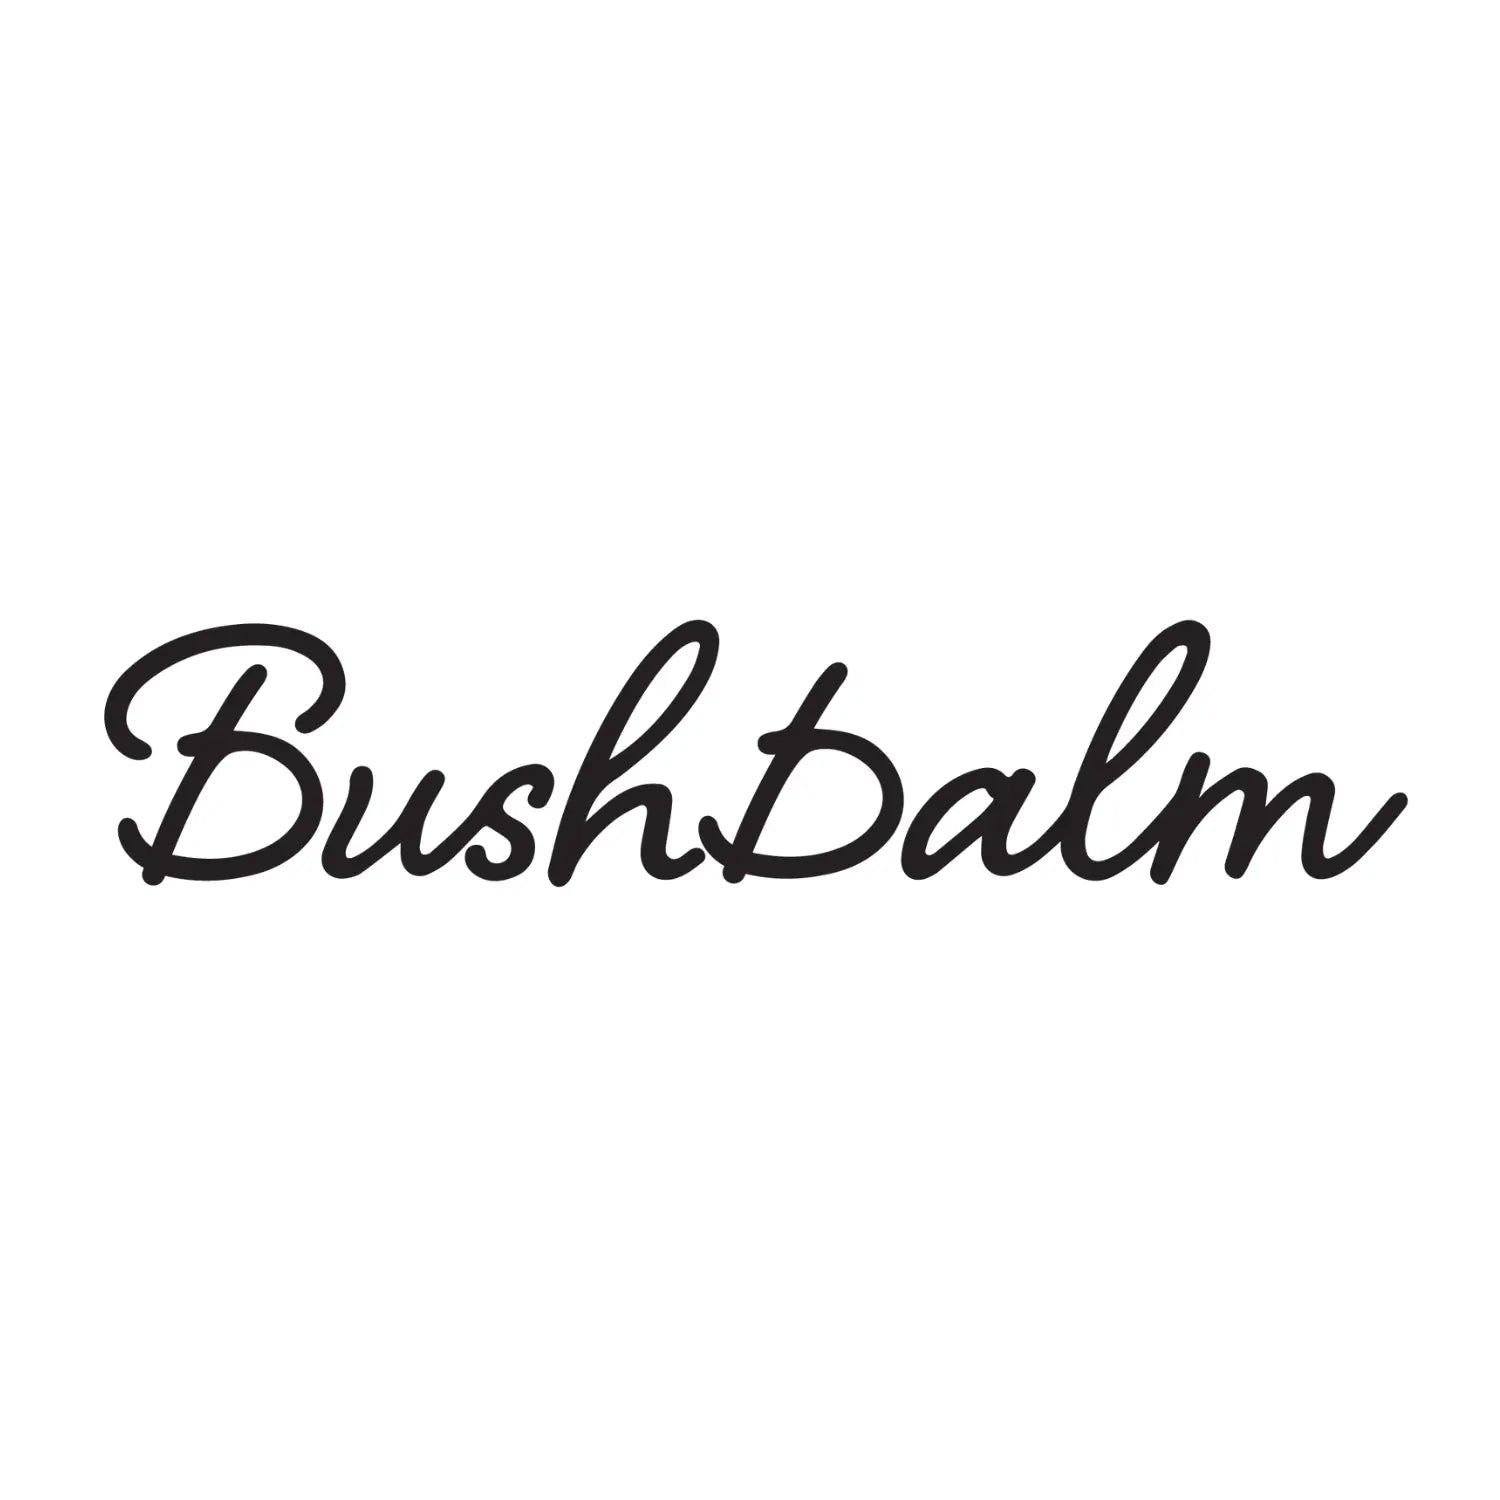 Bushbalm